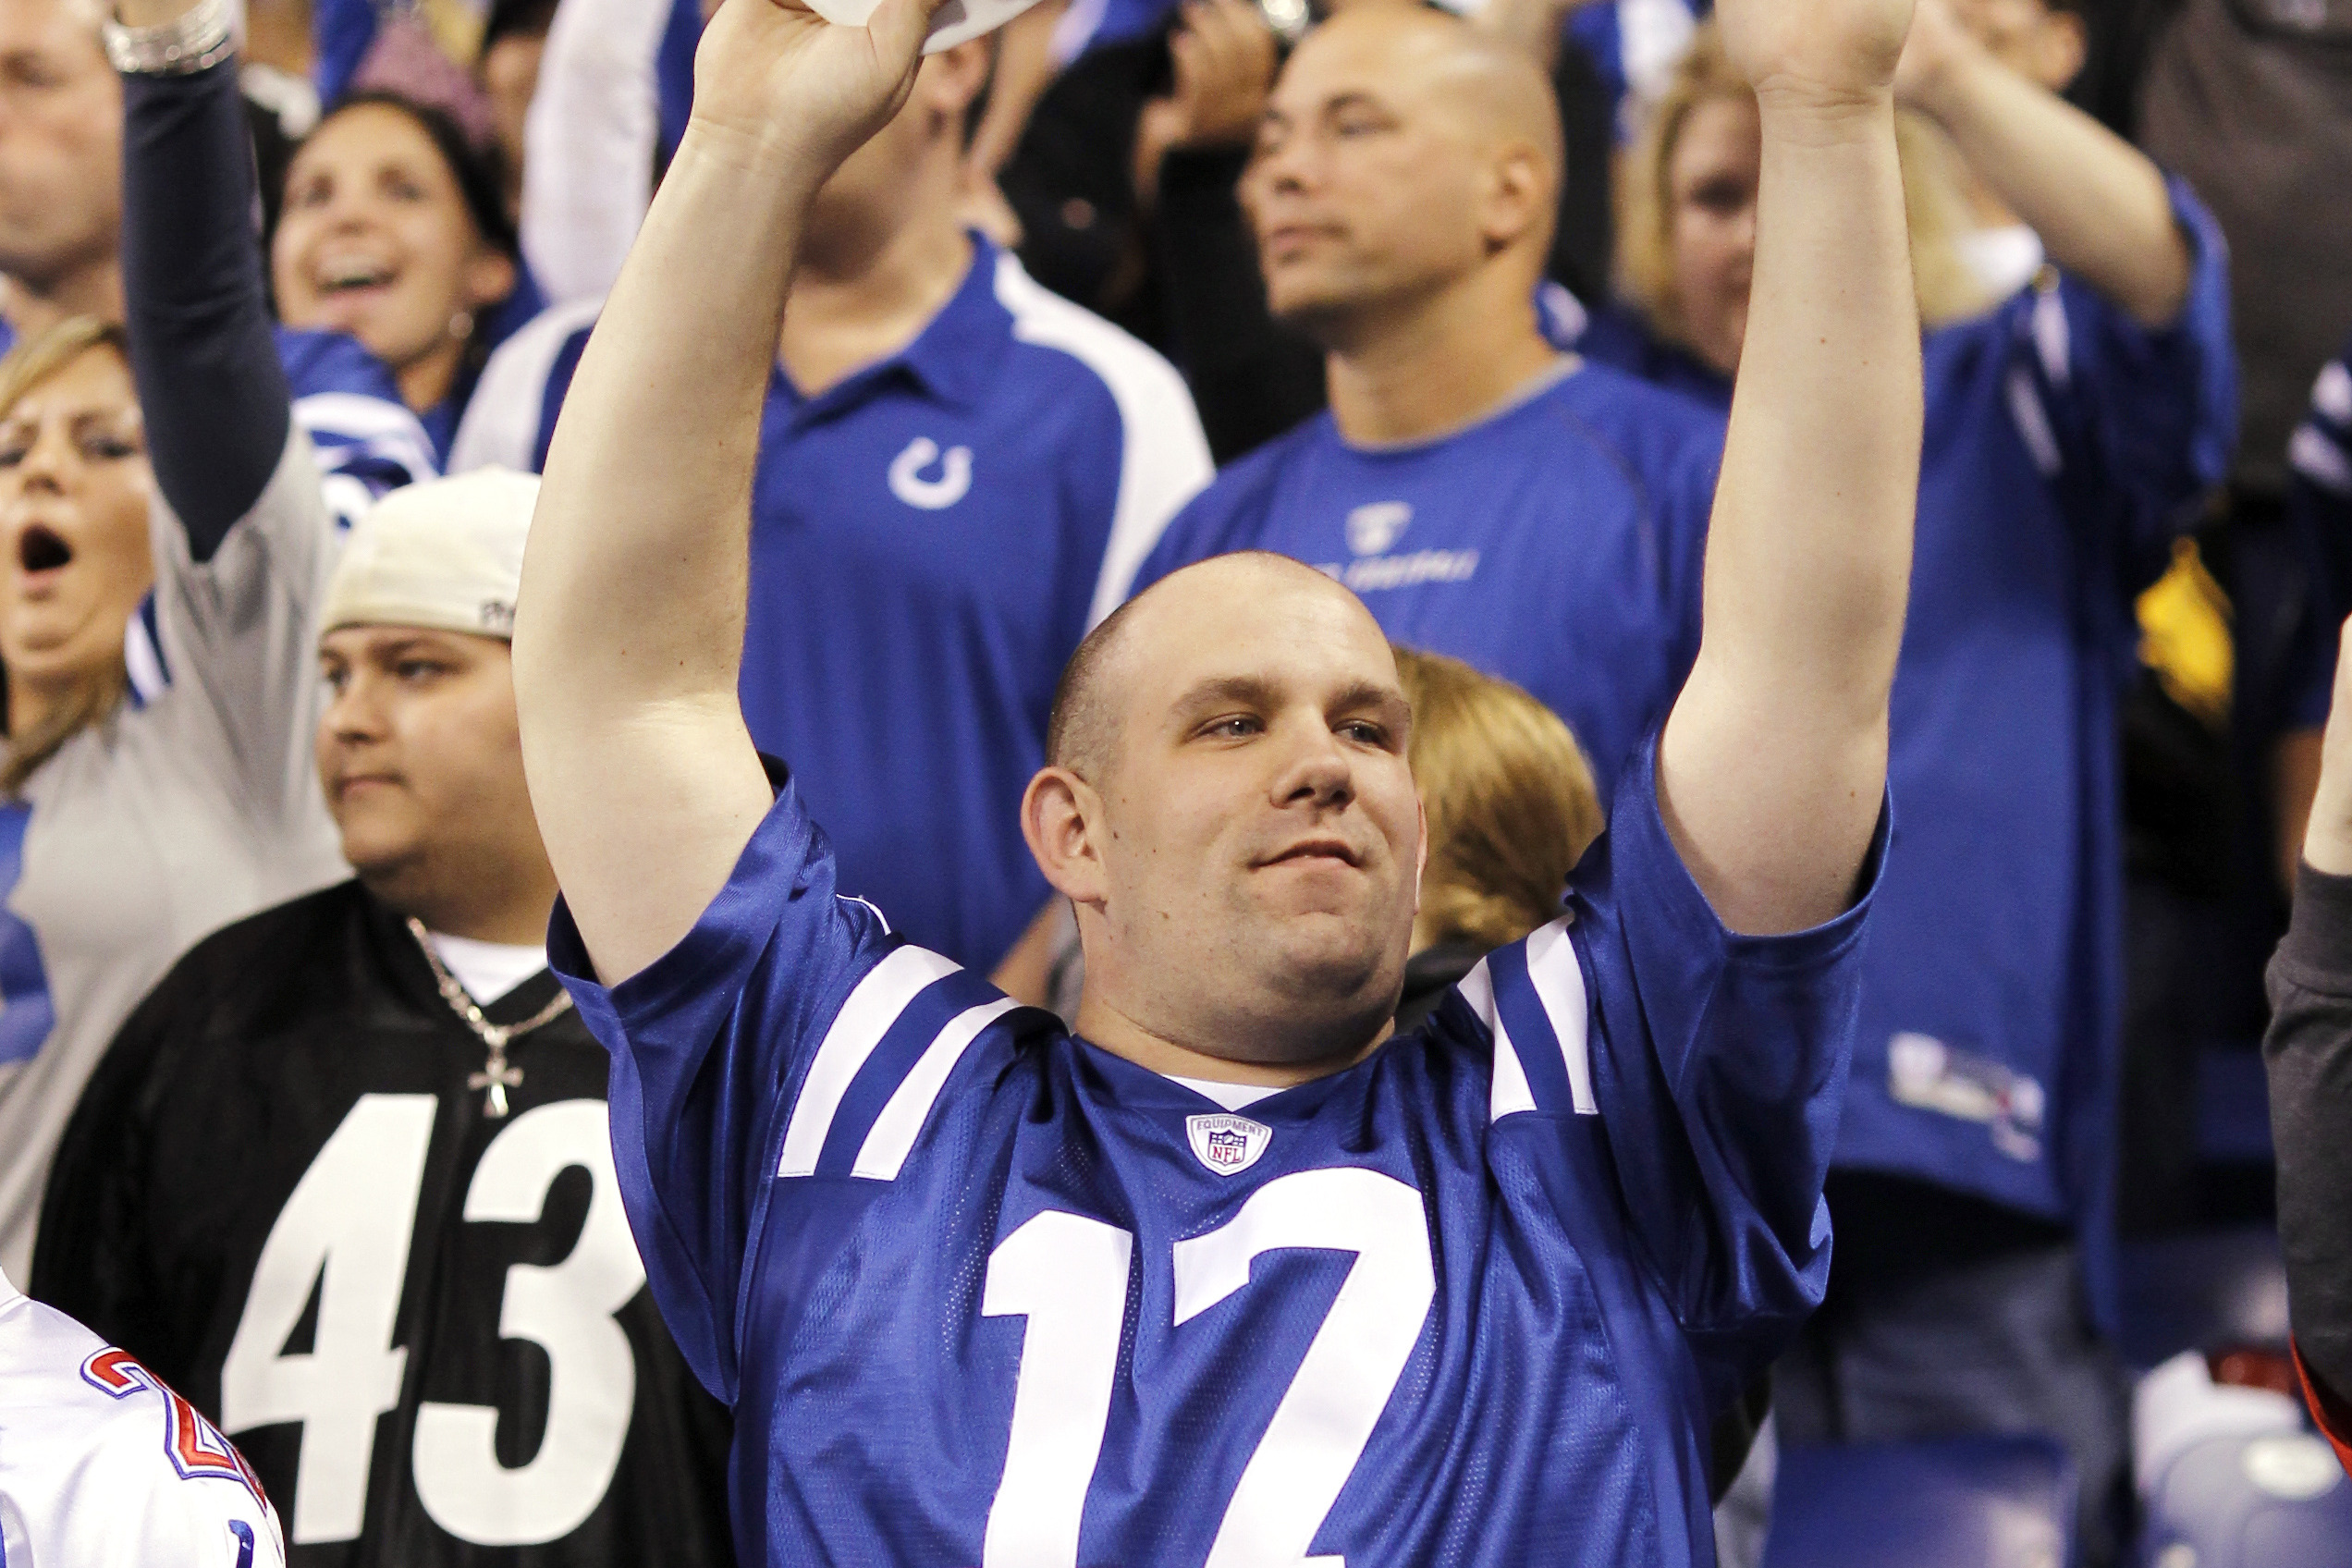 Colts Fans  Indianapolis Colts 